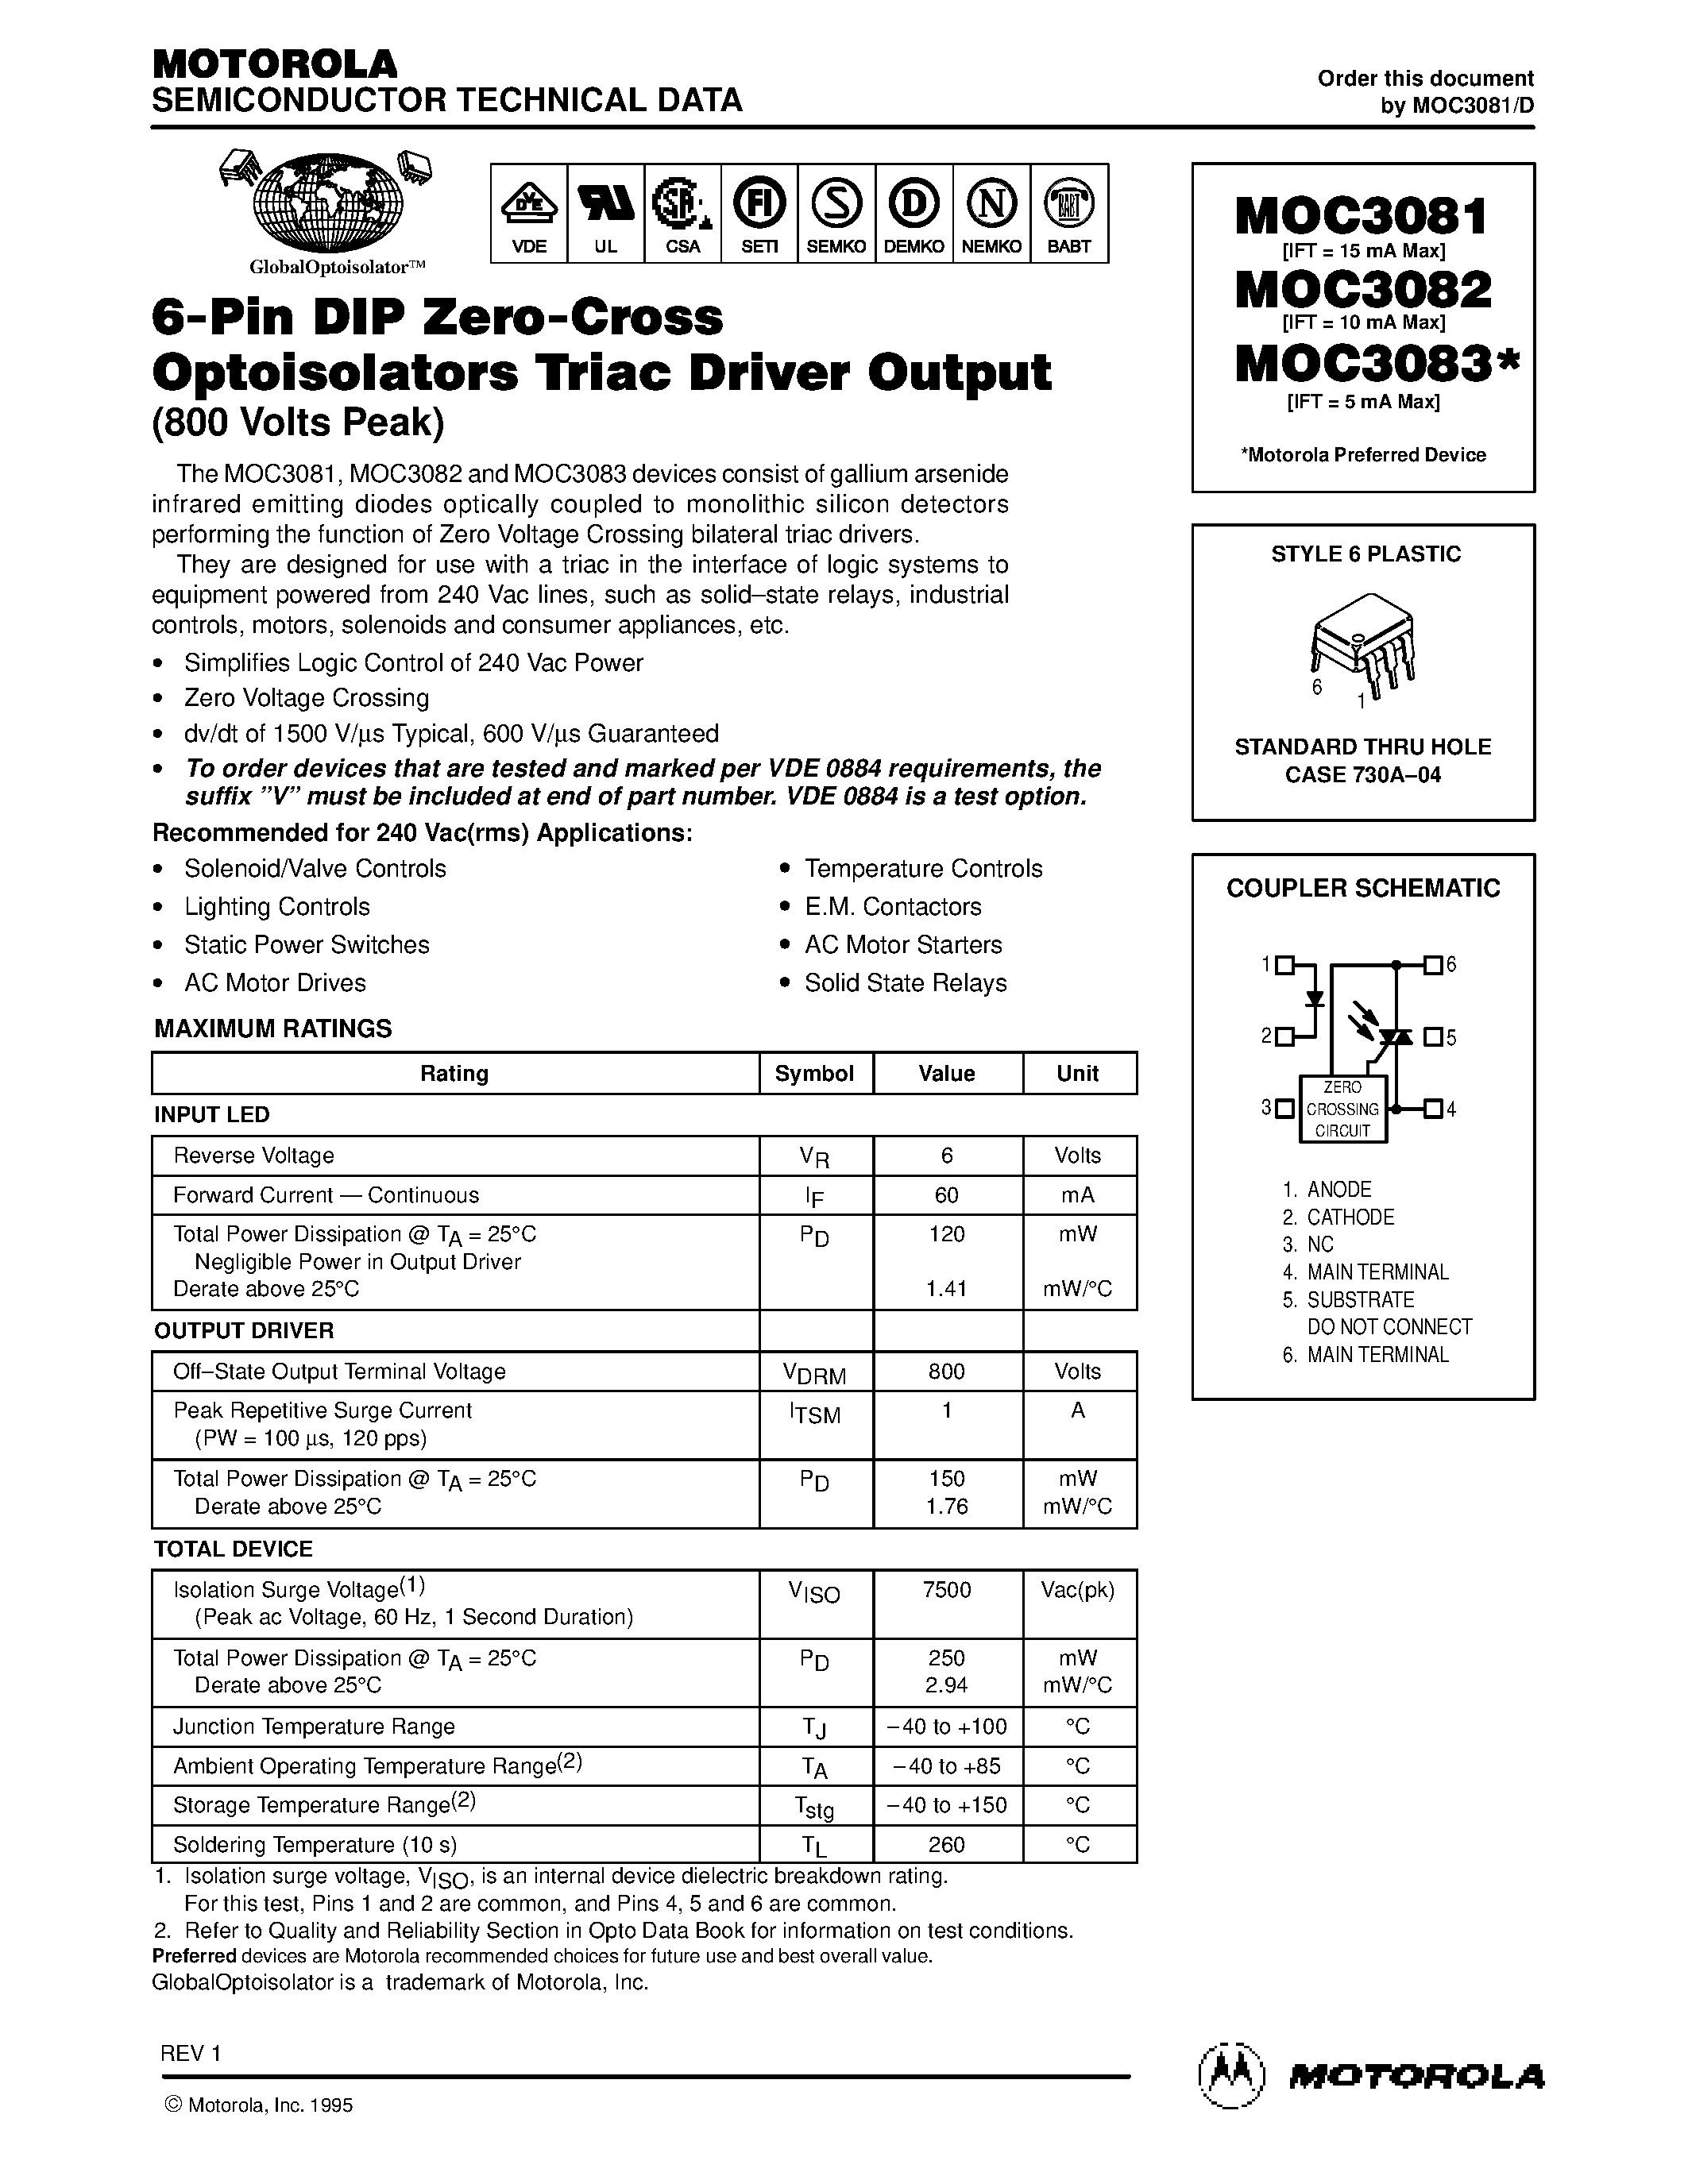 Datasheet MOC3082 - 6-Pin DIP Zero-Cross Optoisolators Triac Driver Output page 1